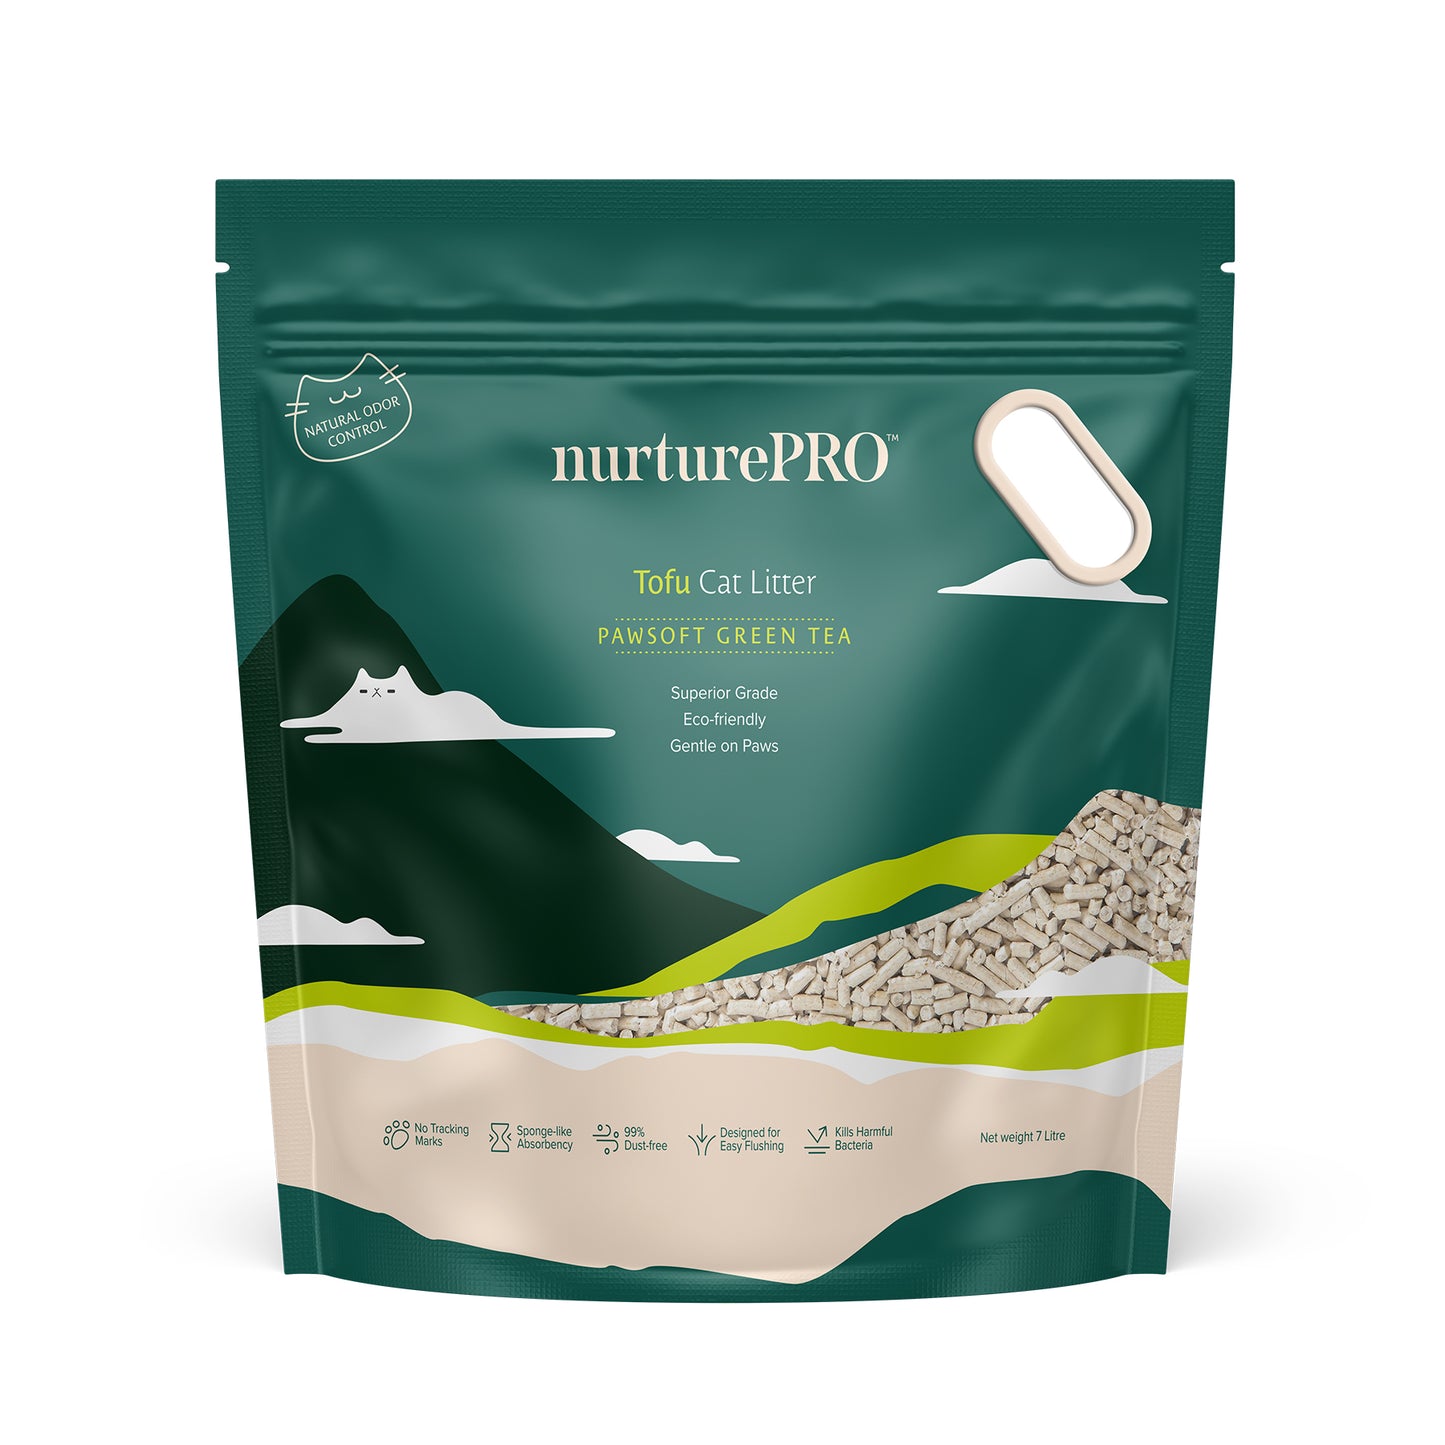 Nurture Pro Tofu Cat Litter Pawsoft Green Tea 7L (Bundle of 6)